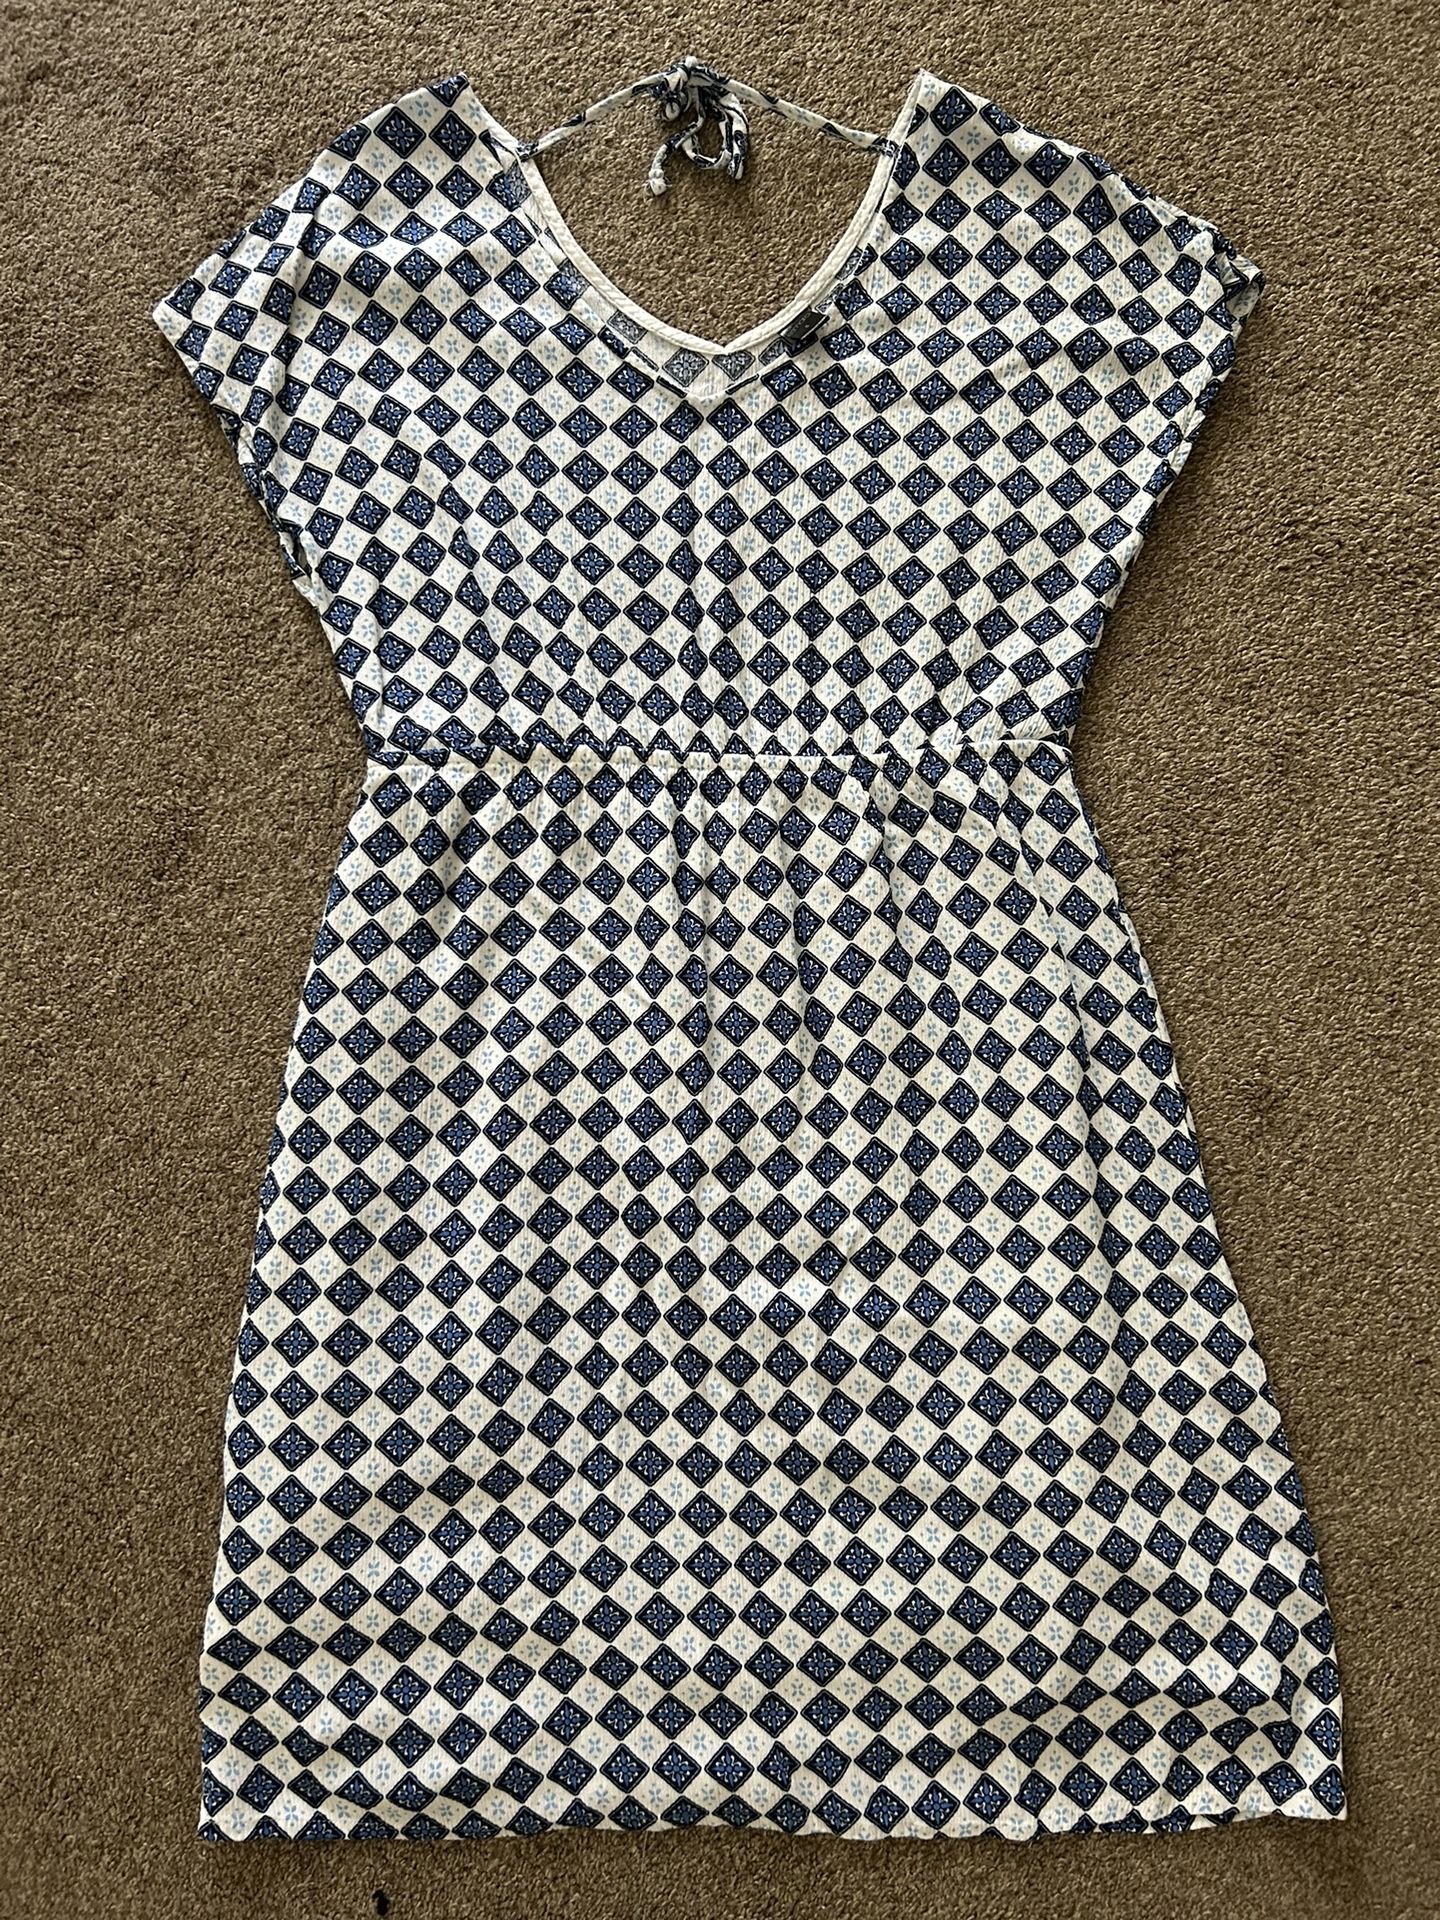 Esmara Cotton White & Blue Dress Size 8